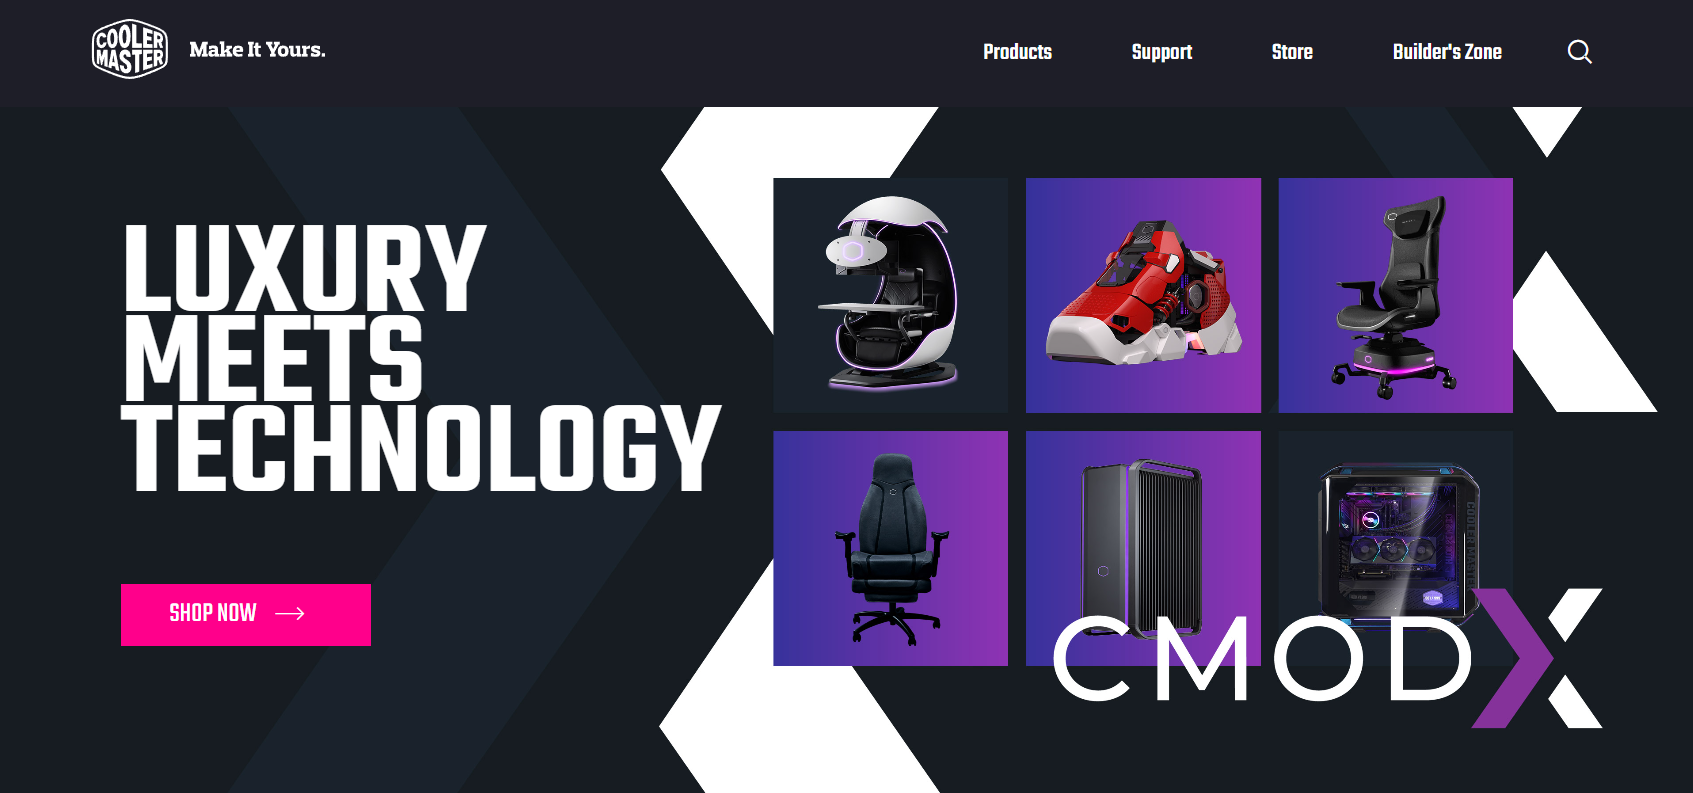 Cooler Master anunció el sitio web CMODX